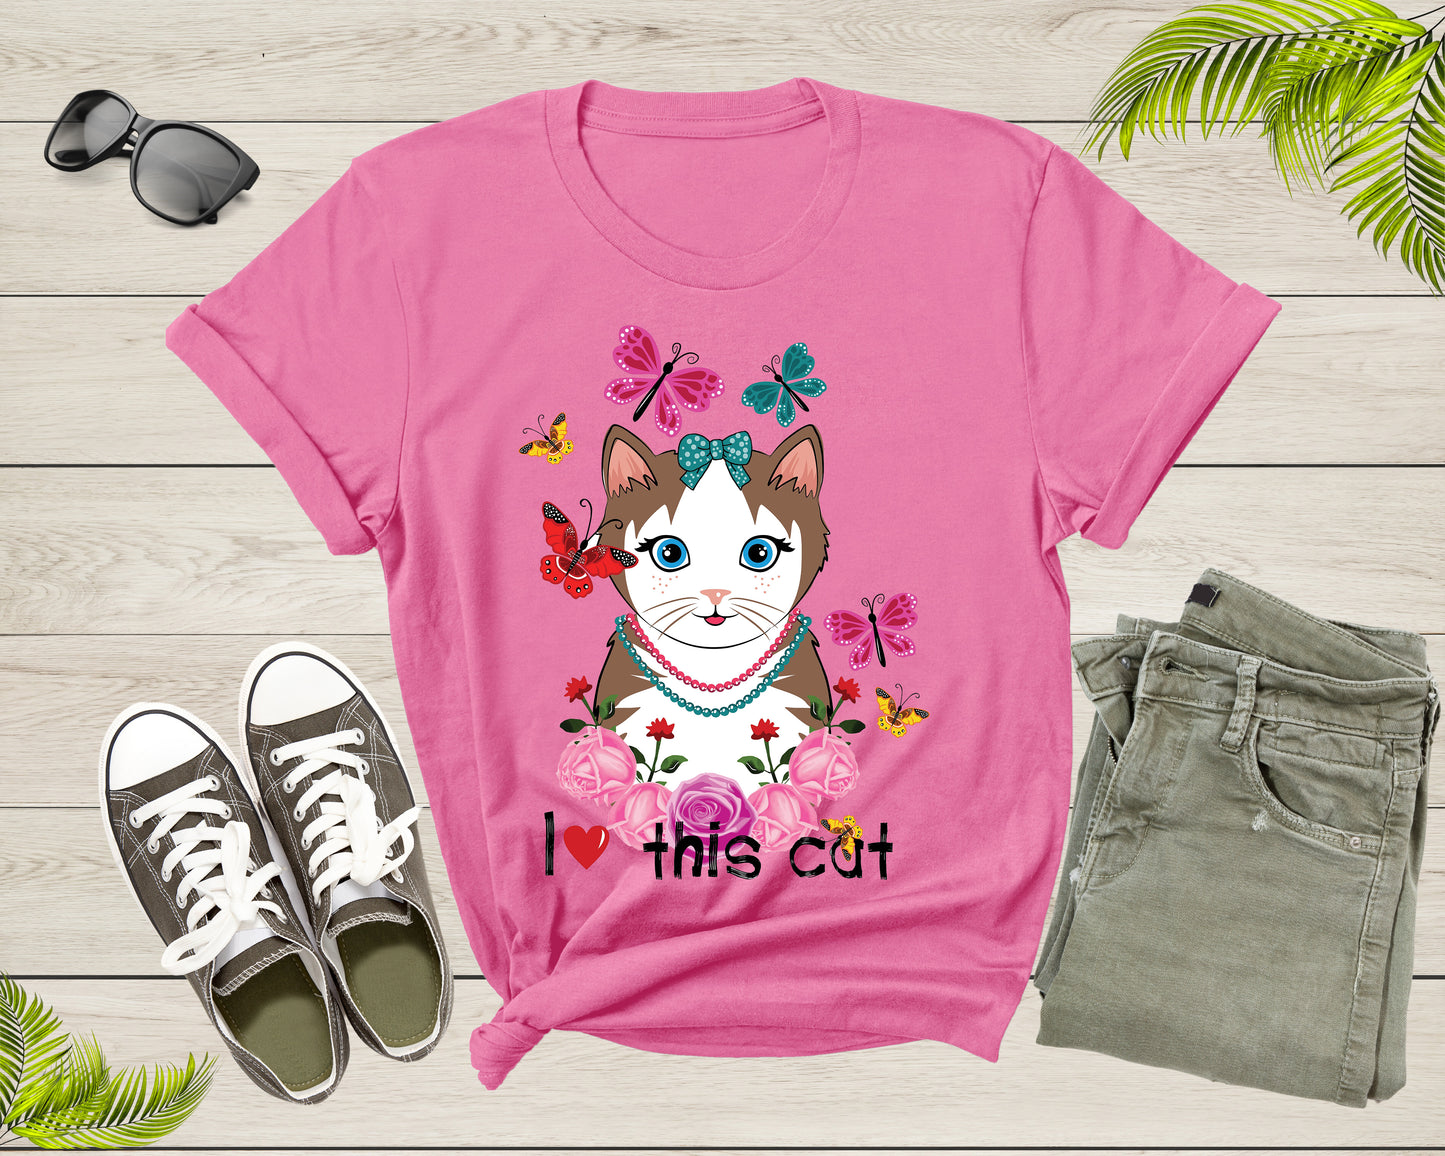 Cute I Love This Cat Butterflies and Roses for Women Girls T-Shirt Cat Lover Gift T Shirt for Men Women Kids Boys Girls Graphic Tshirt